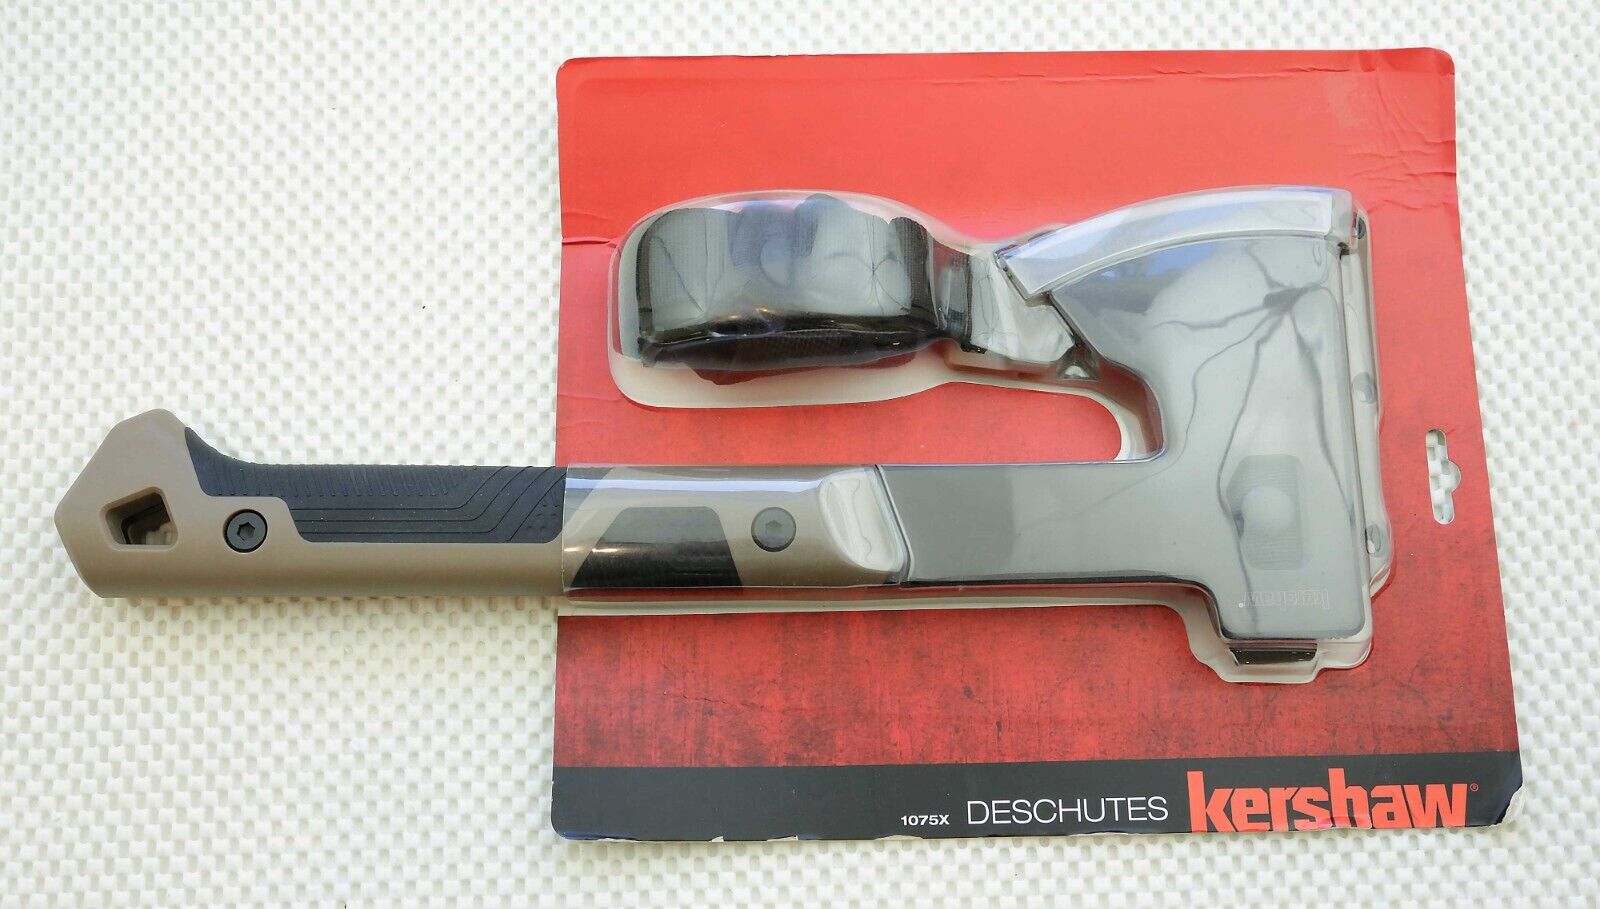 Kershaw 1075X Deschutes Axe 3Cr13 Steel Tan Nylon/Rubberized Handle